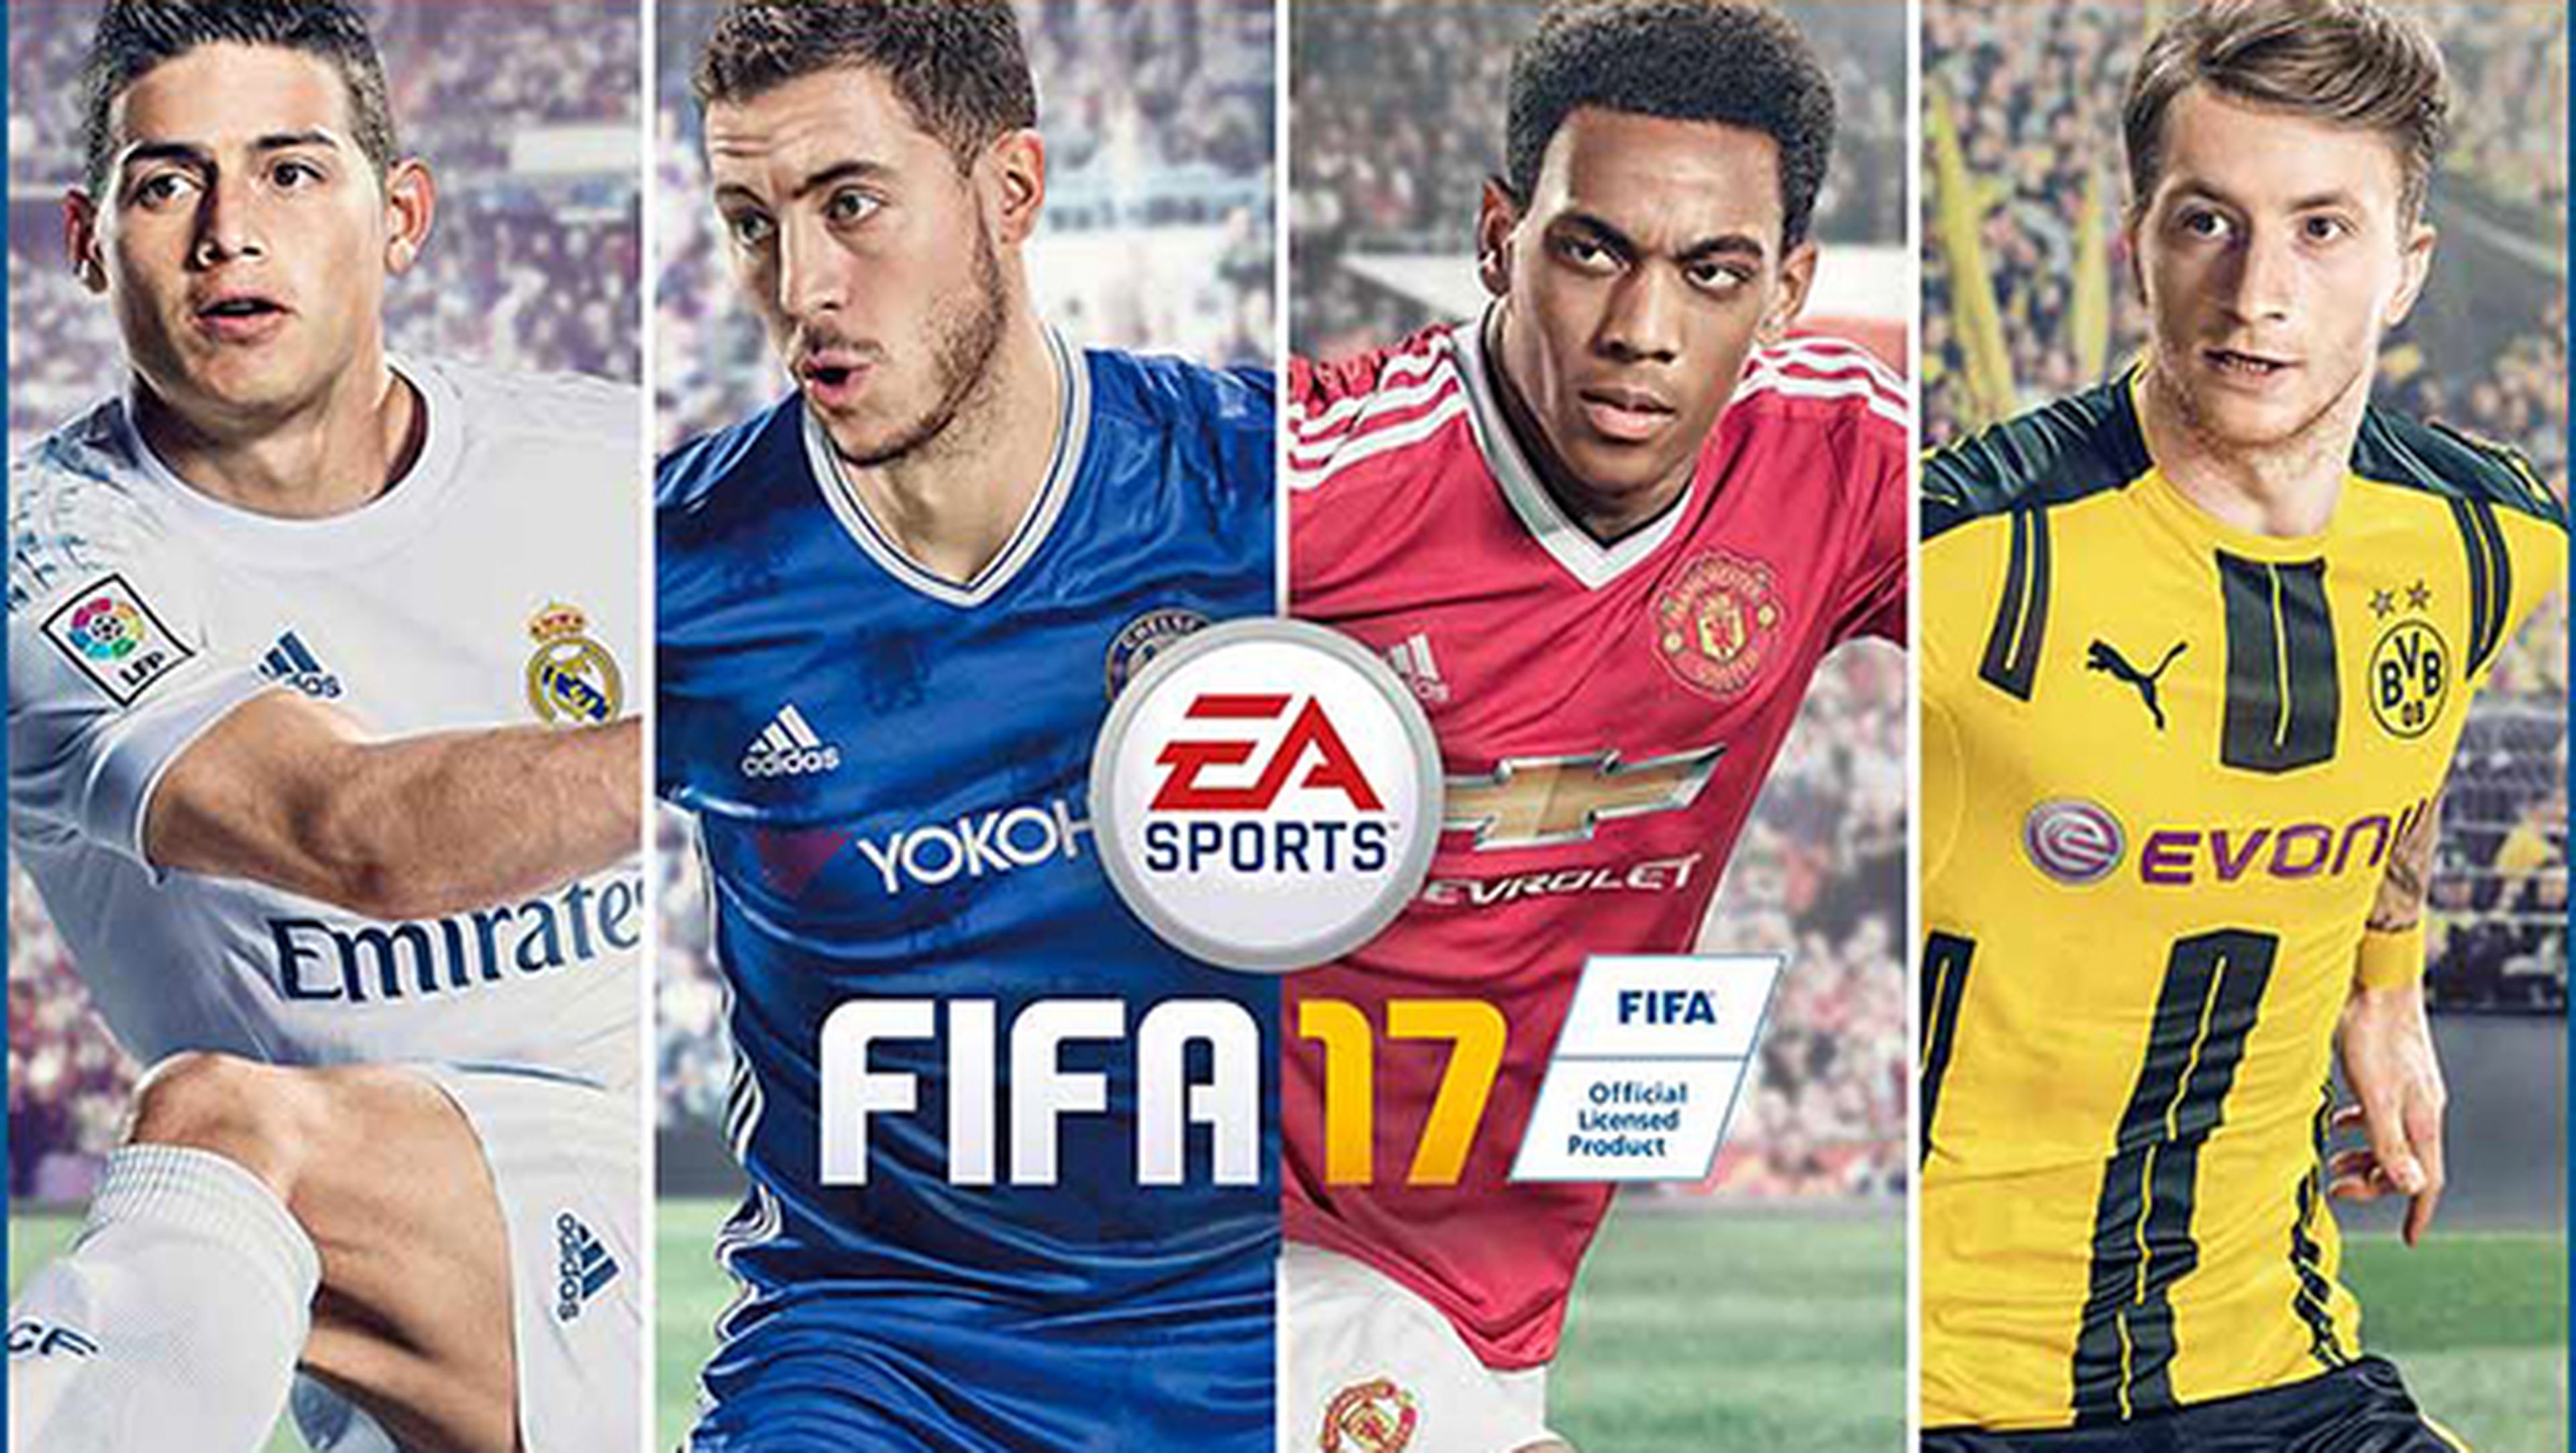 Novedades FIFA 17